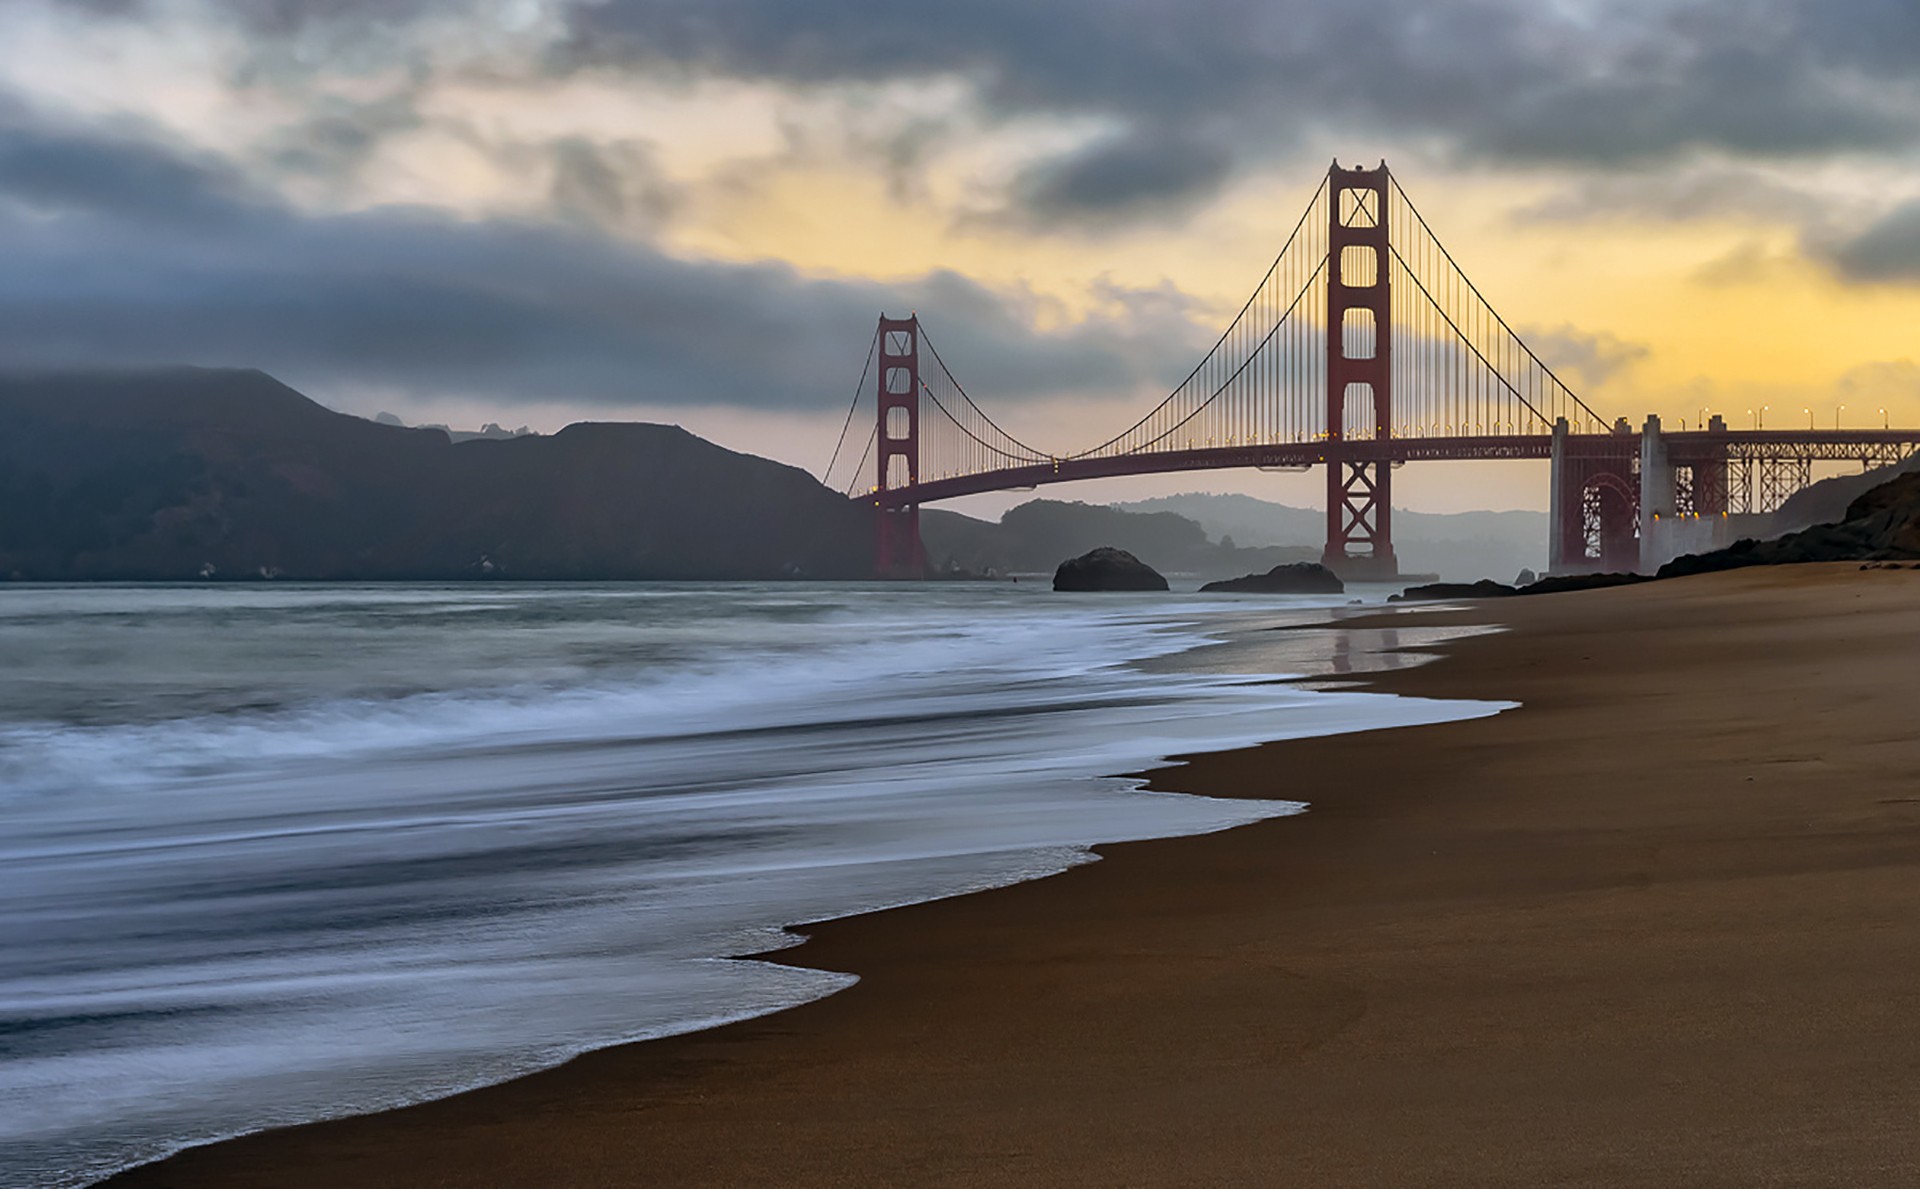 General 1920x1189 San Francisco USA Golden Gate Bridge bridge Pacific Ocean sea sky clouds beach landscape suspension bridge